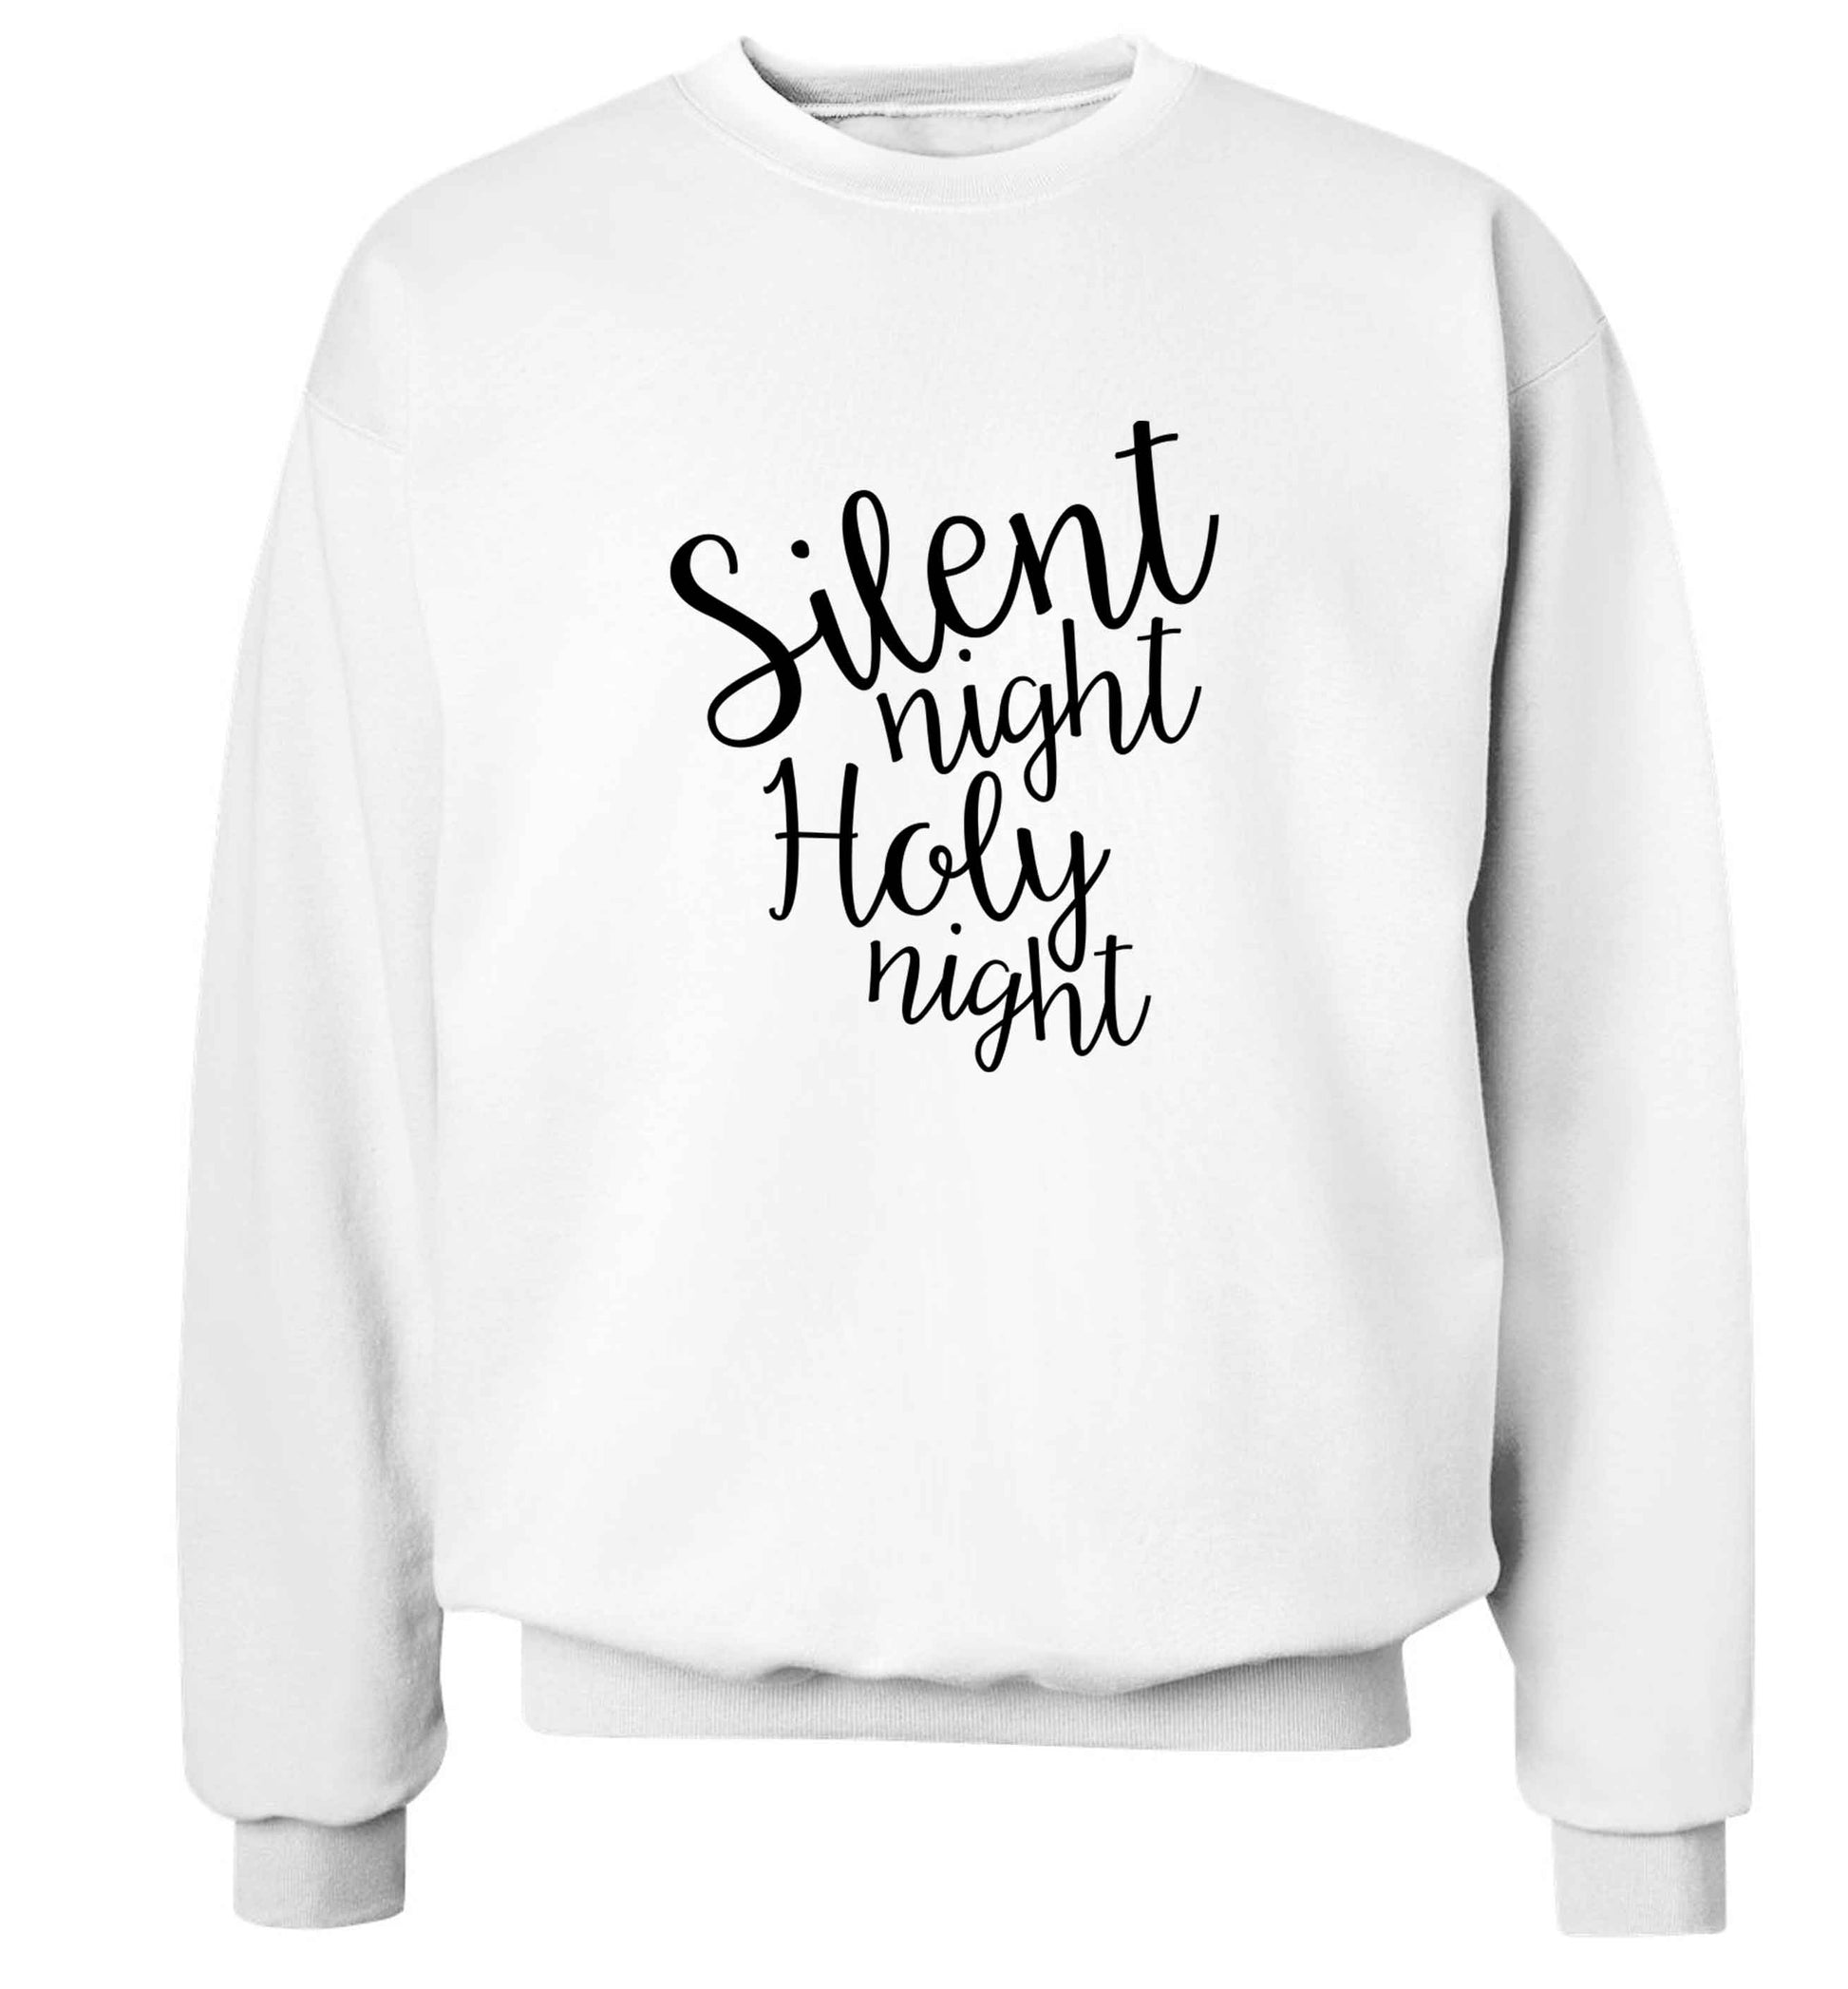 Silent night holy night adult's unisex white sweater 2XL